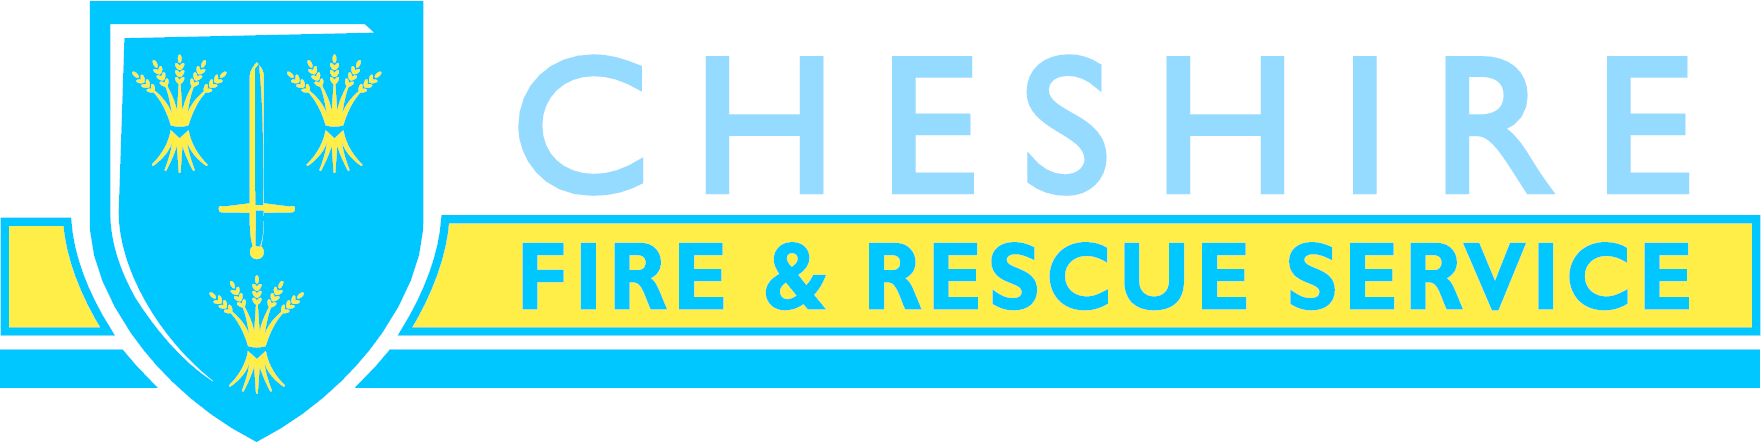 Cheshire Fire and Rescue Service logo